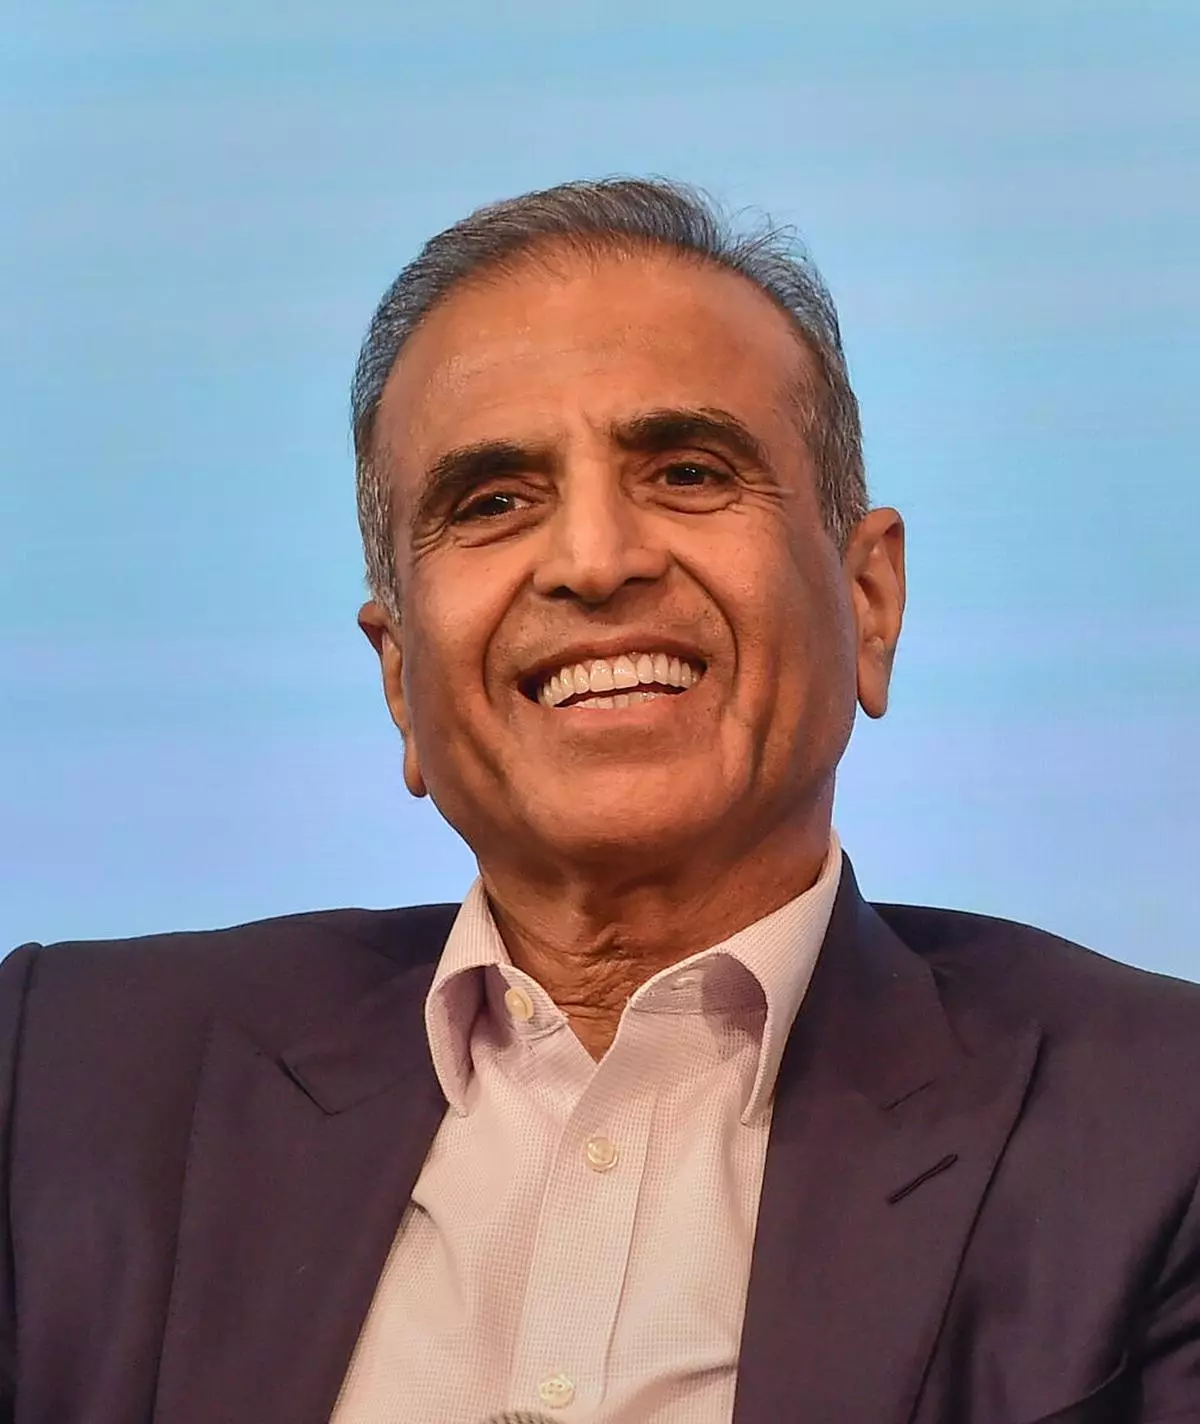 Sunil Bharti Mittal, Founder and Chairman, Bharti Enterprises